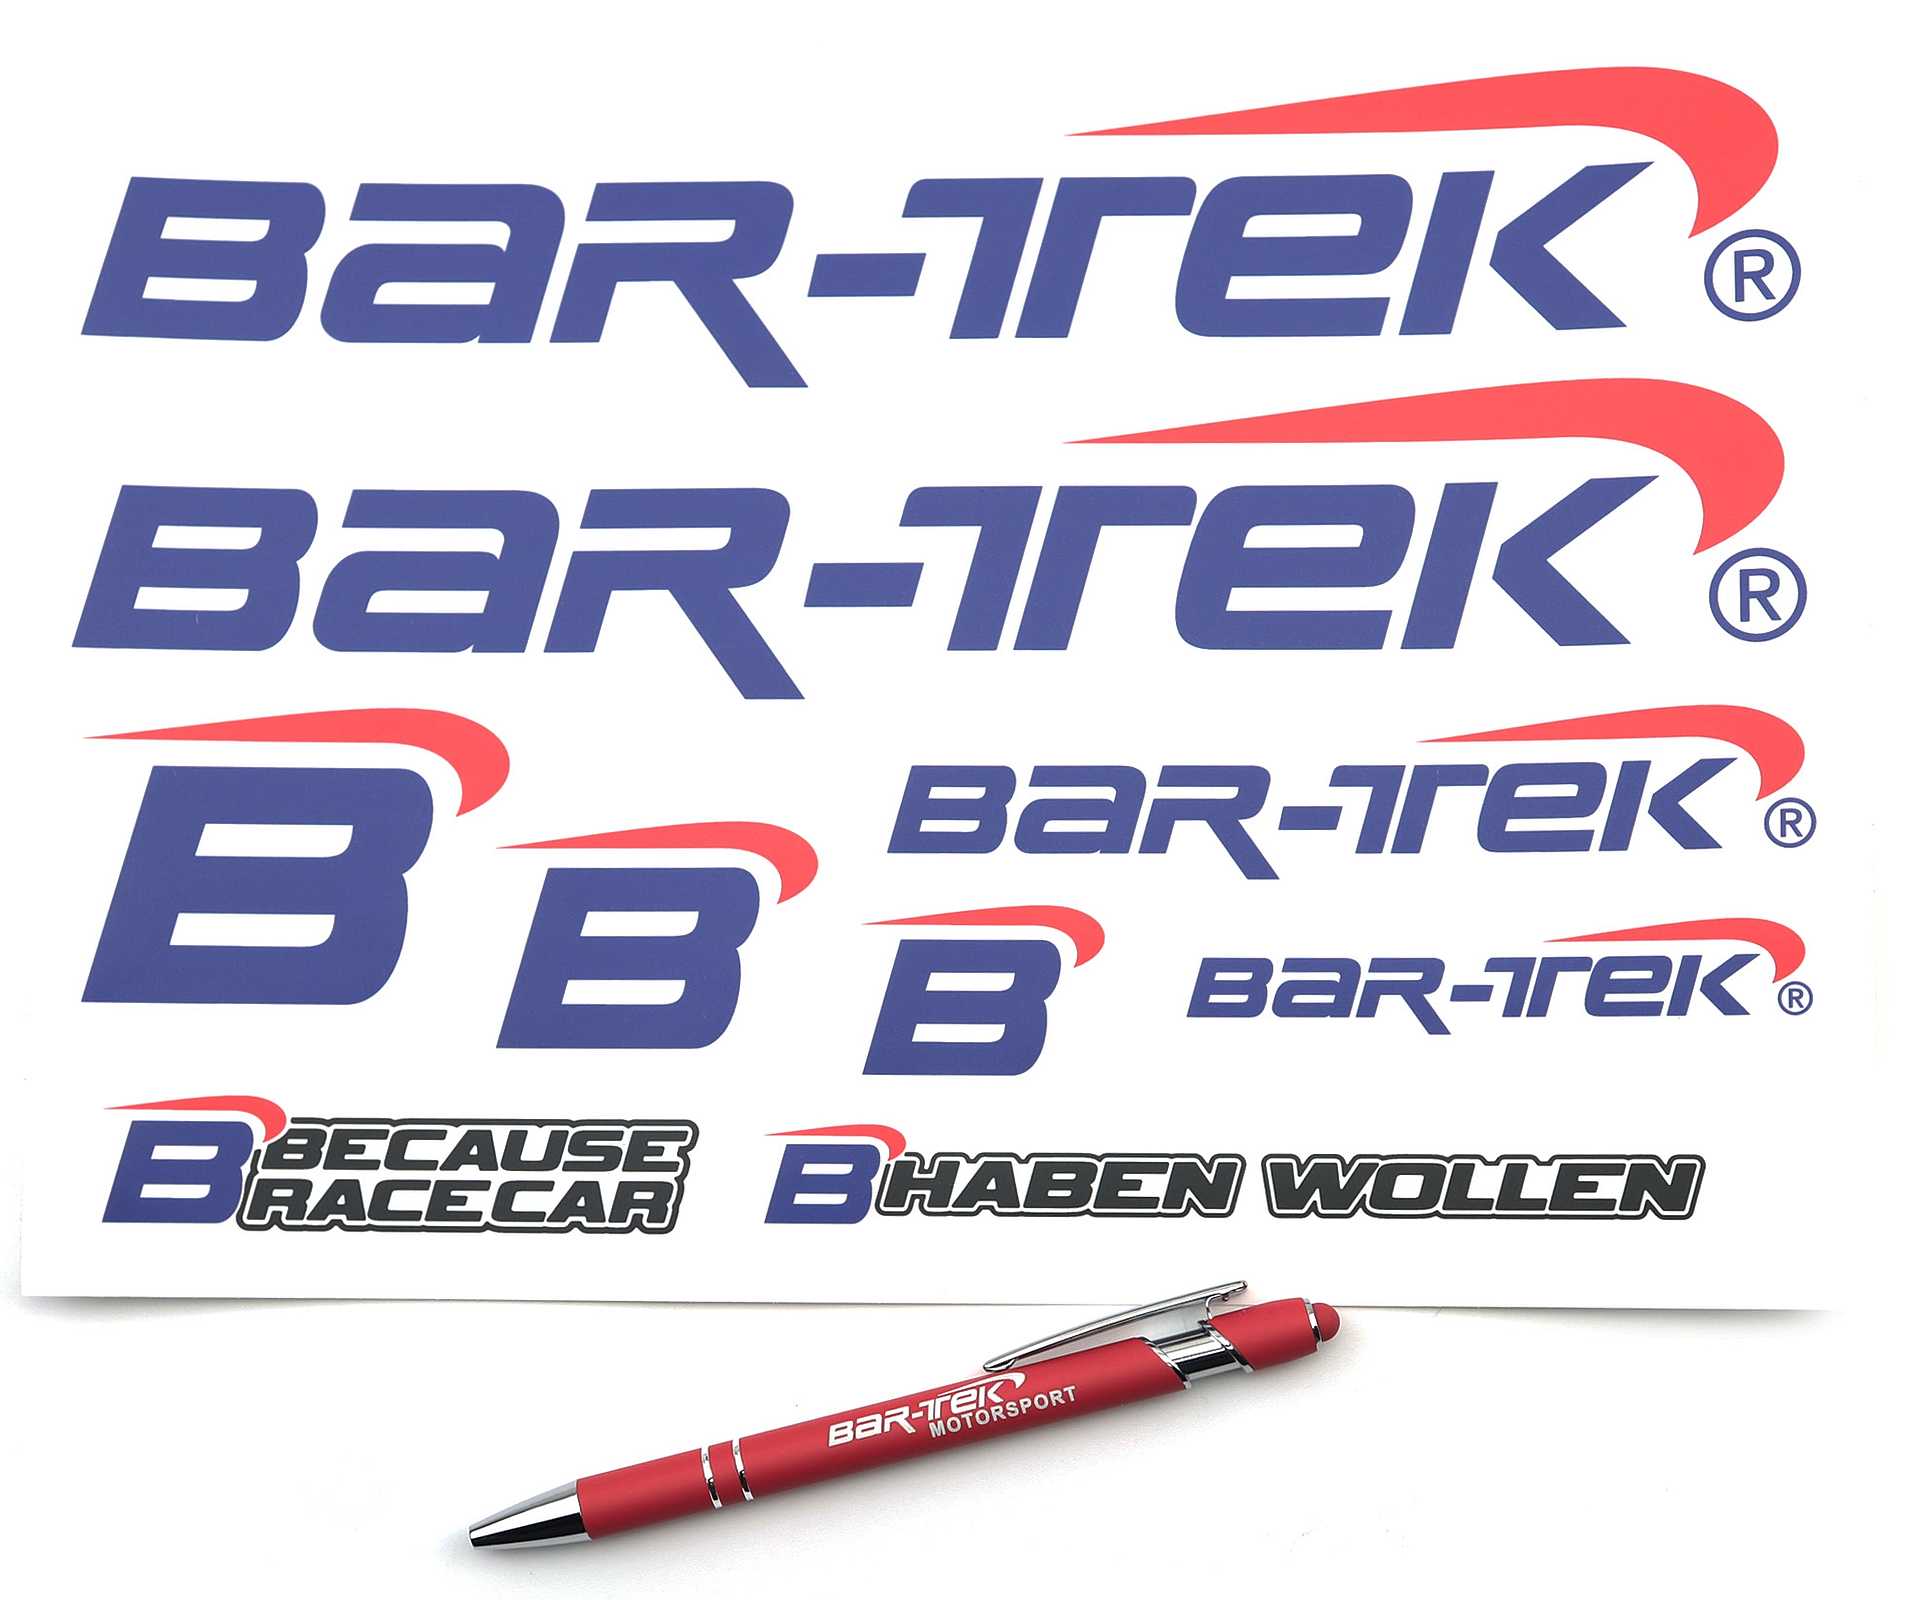 Sticker sheet with BAR-TEK® logos